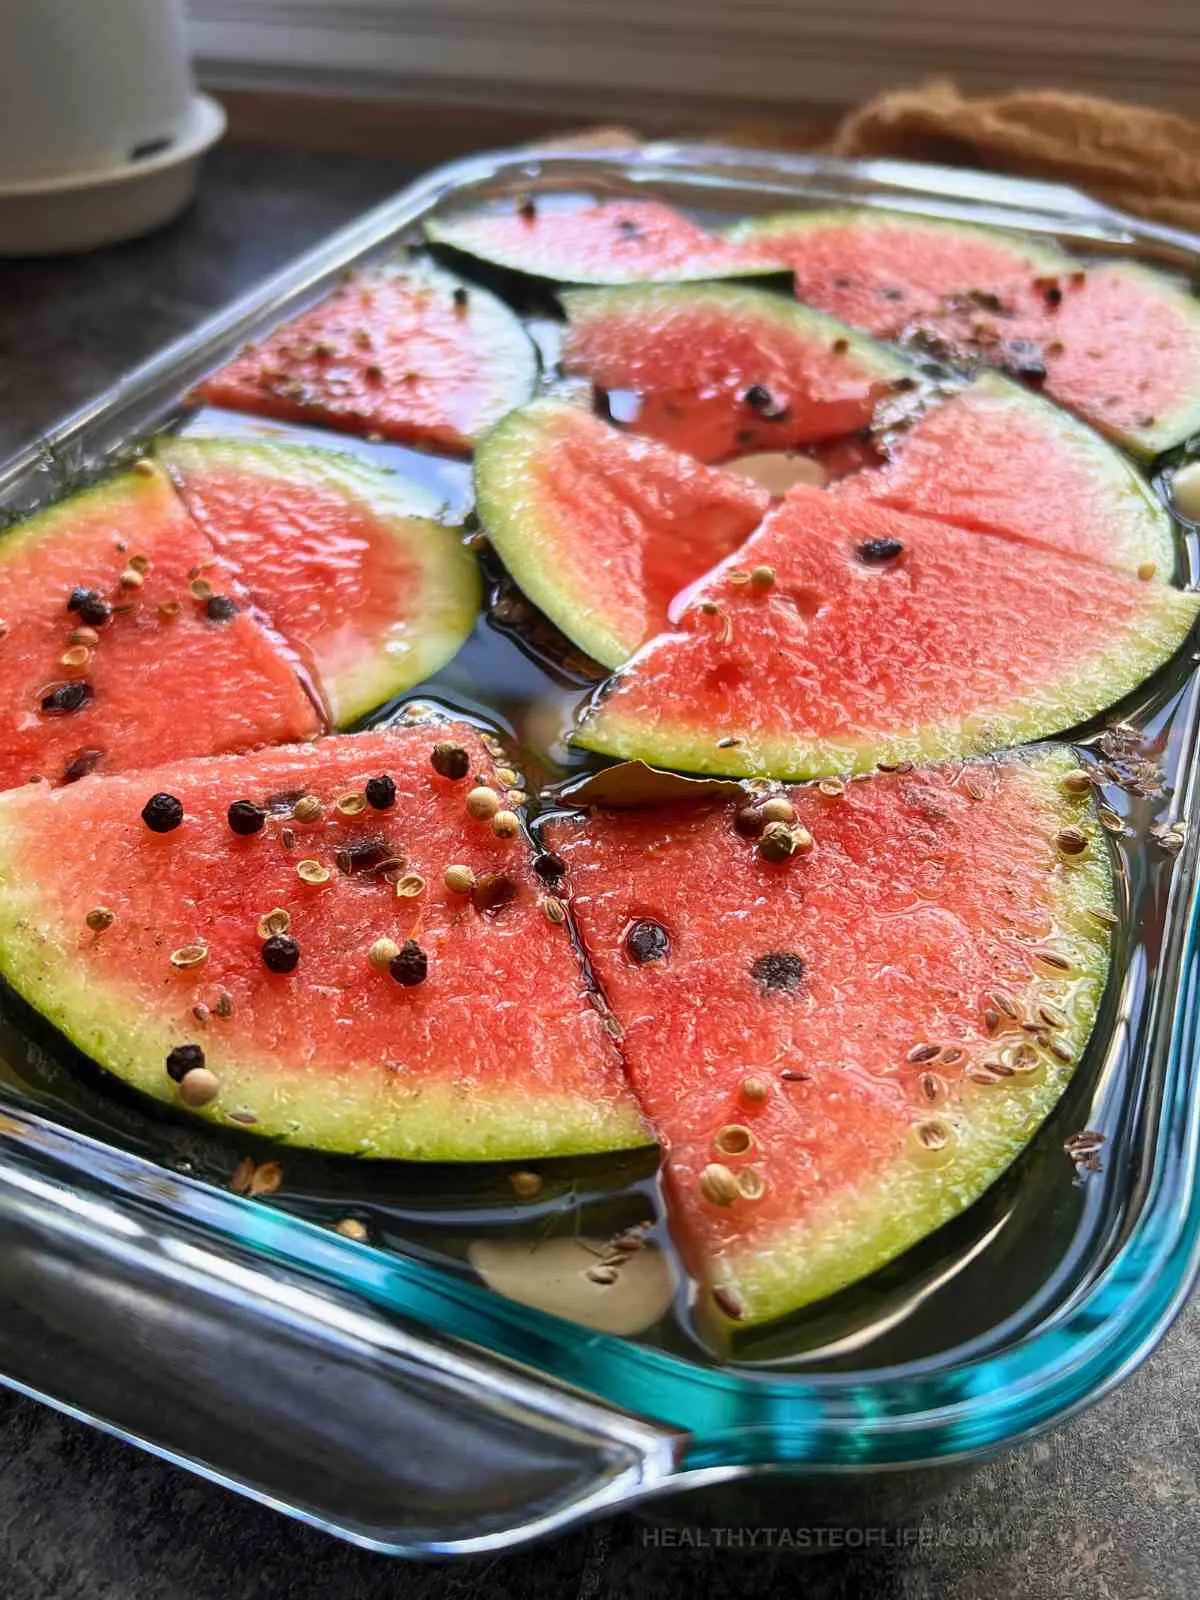 Watermelon covered in brine.